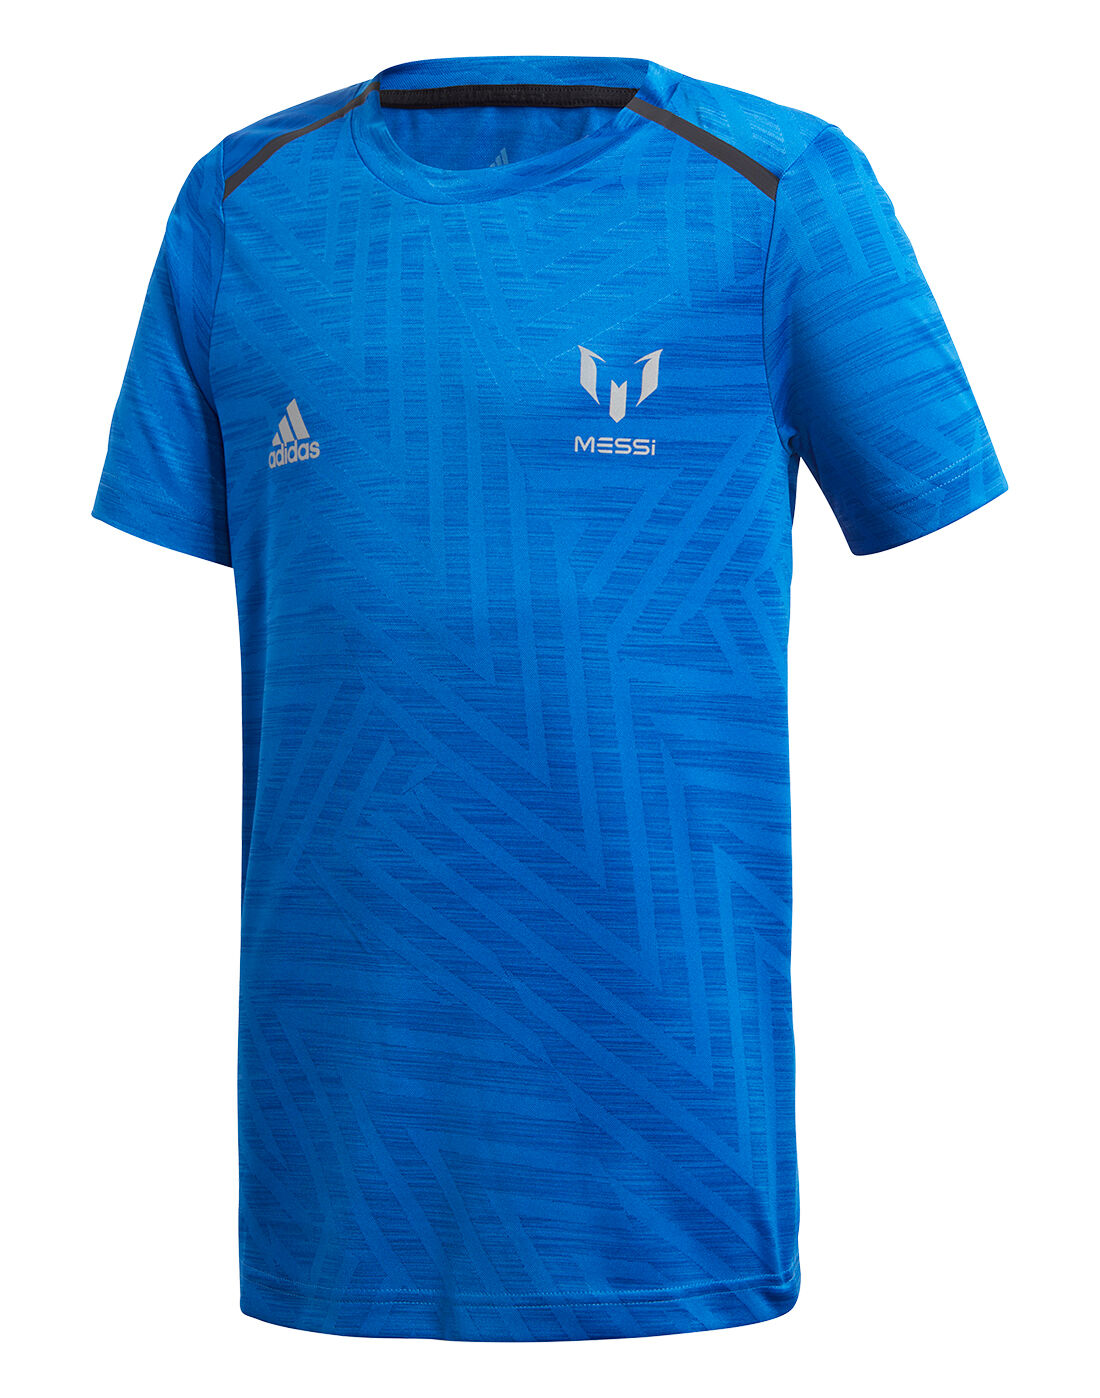 Boy's adidas Messi T-Shirt | Blue | Life Style Sports